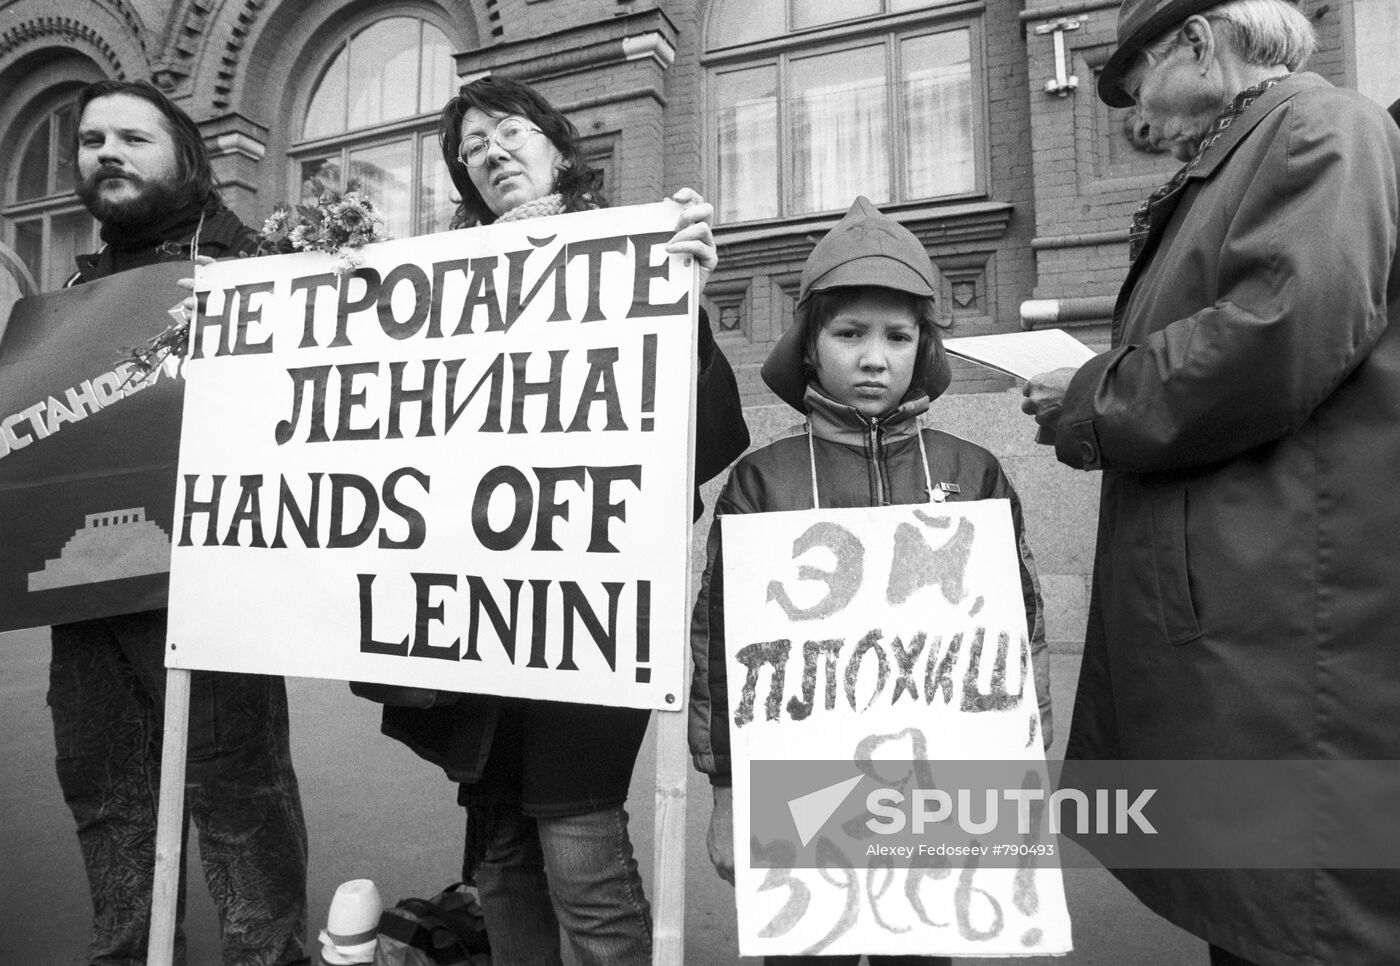 Rally in defense of Lenin's memory